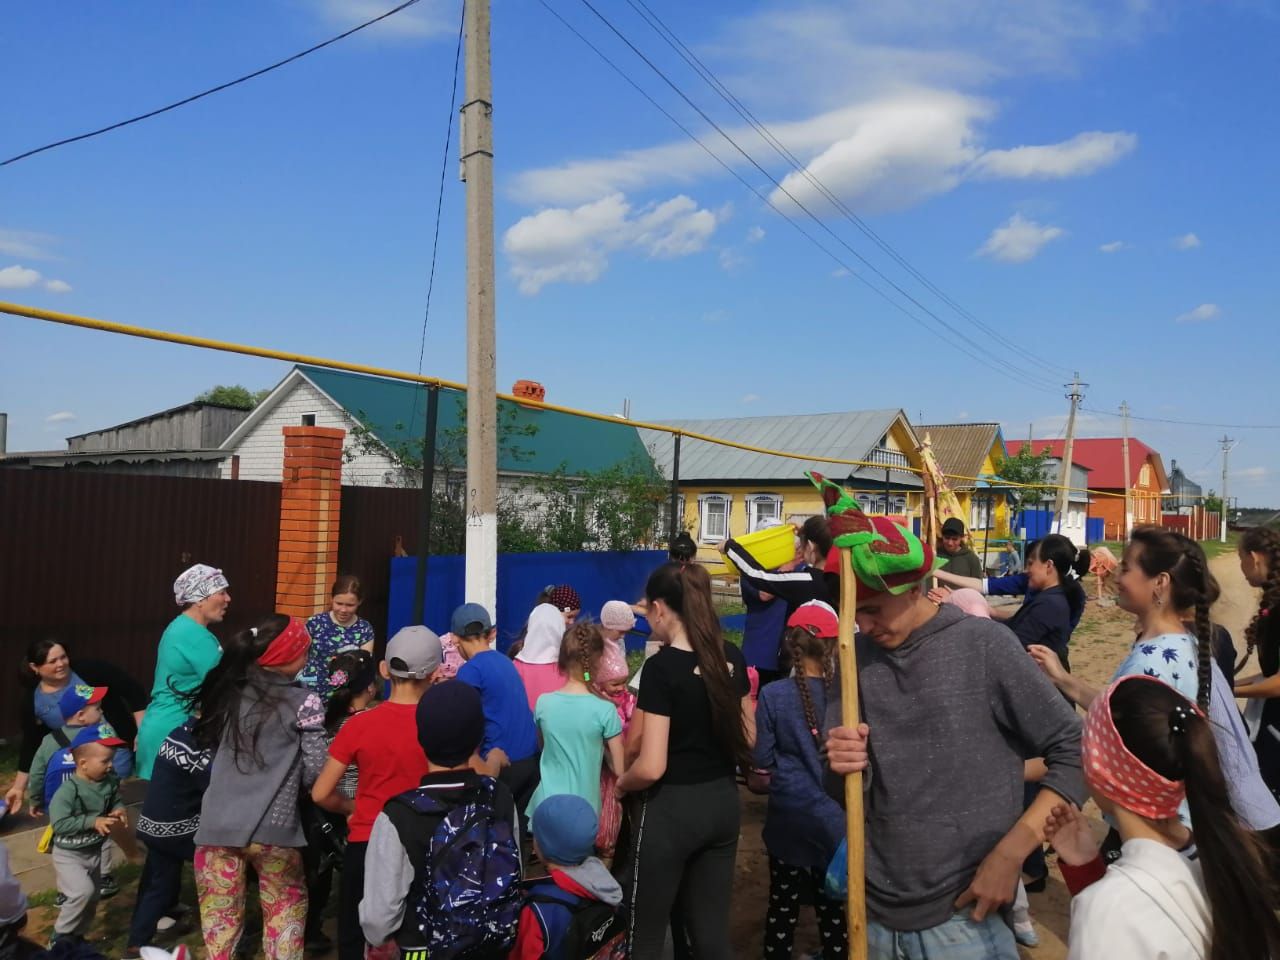 Явлаштау авыл җирлегендә татар халкының милли бәйрәме "Сабантуй"га әзерлек бара